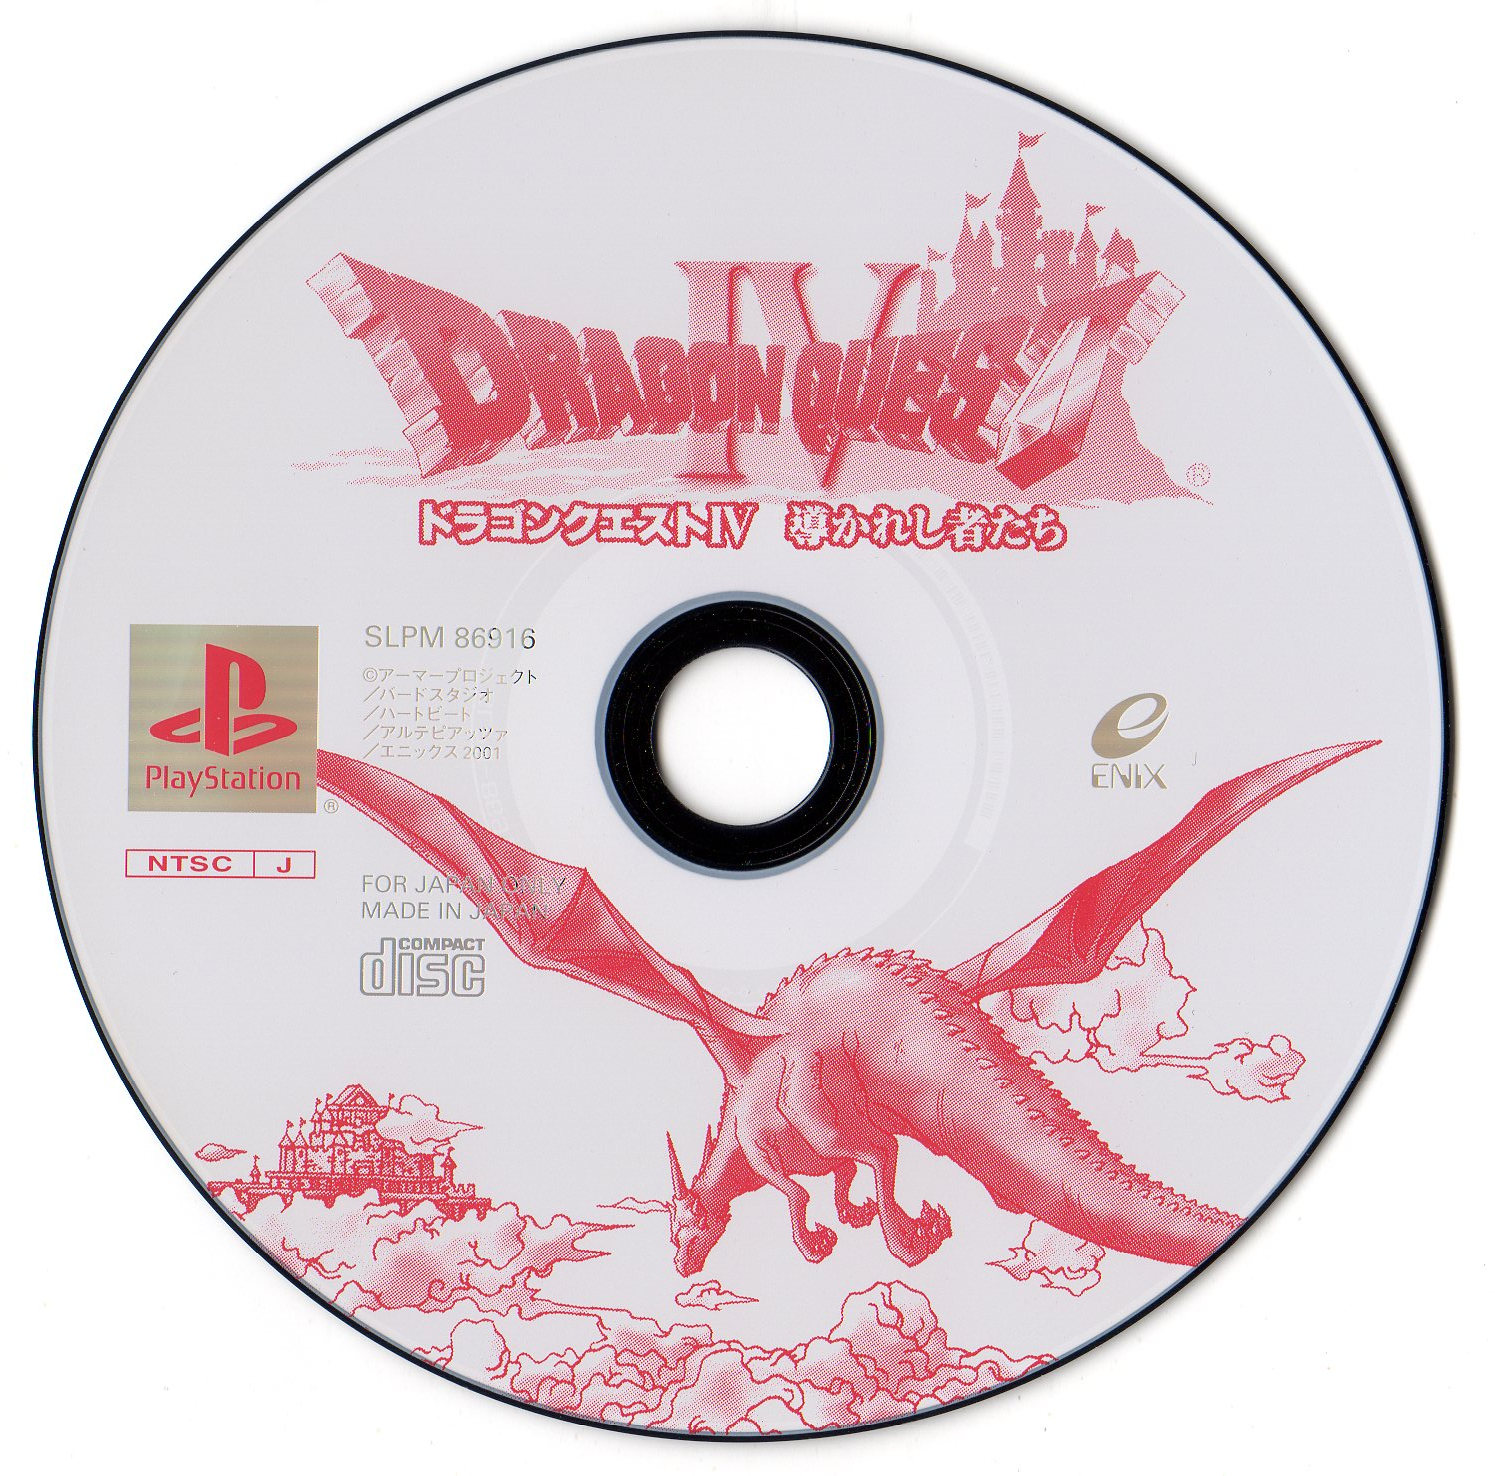 Dragon Quest IV PSX cover